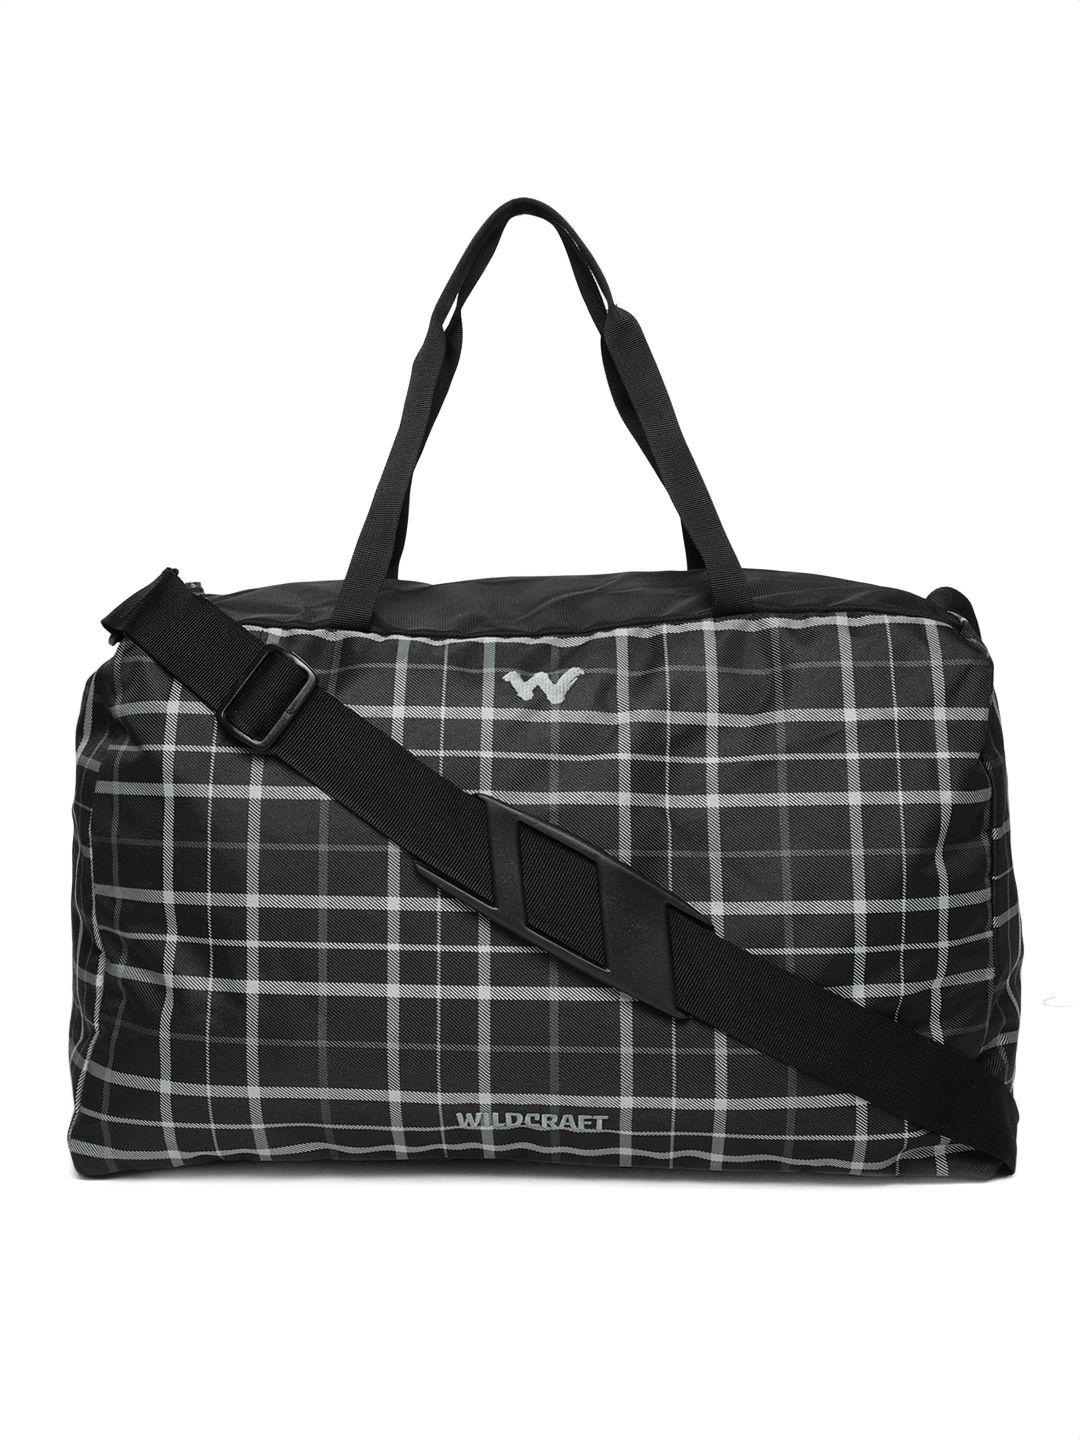 wildcraft unisex grey checked duffel bag